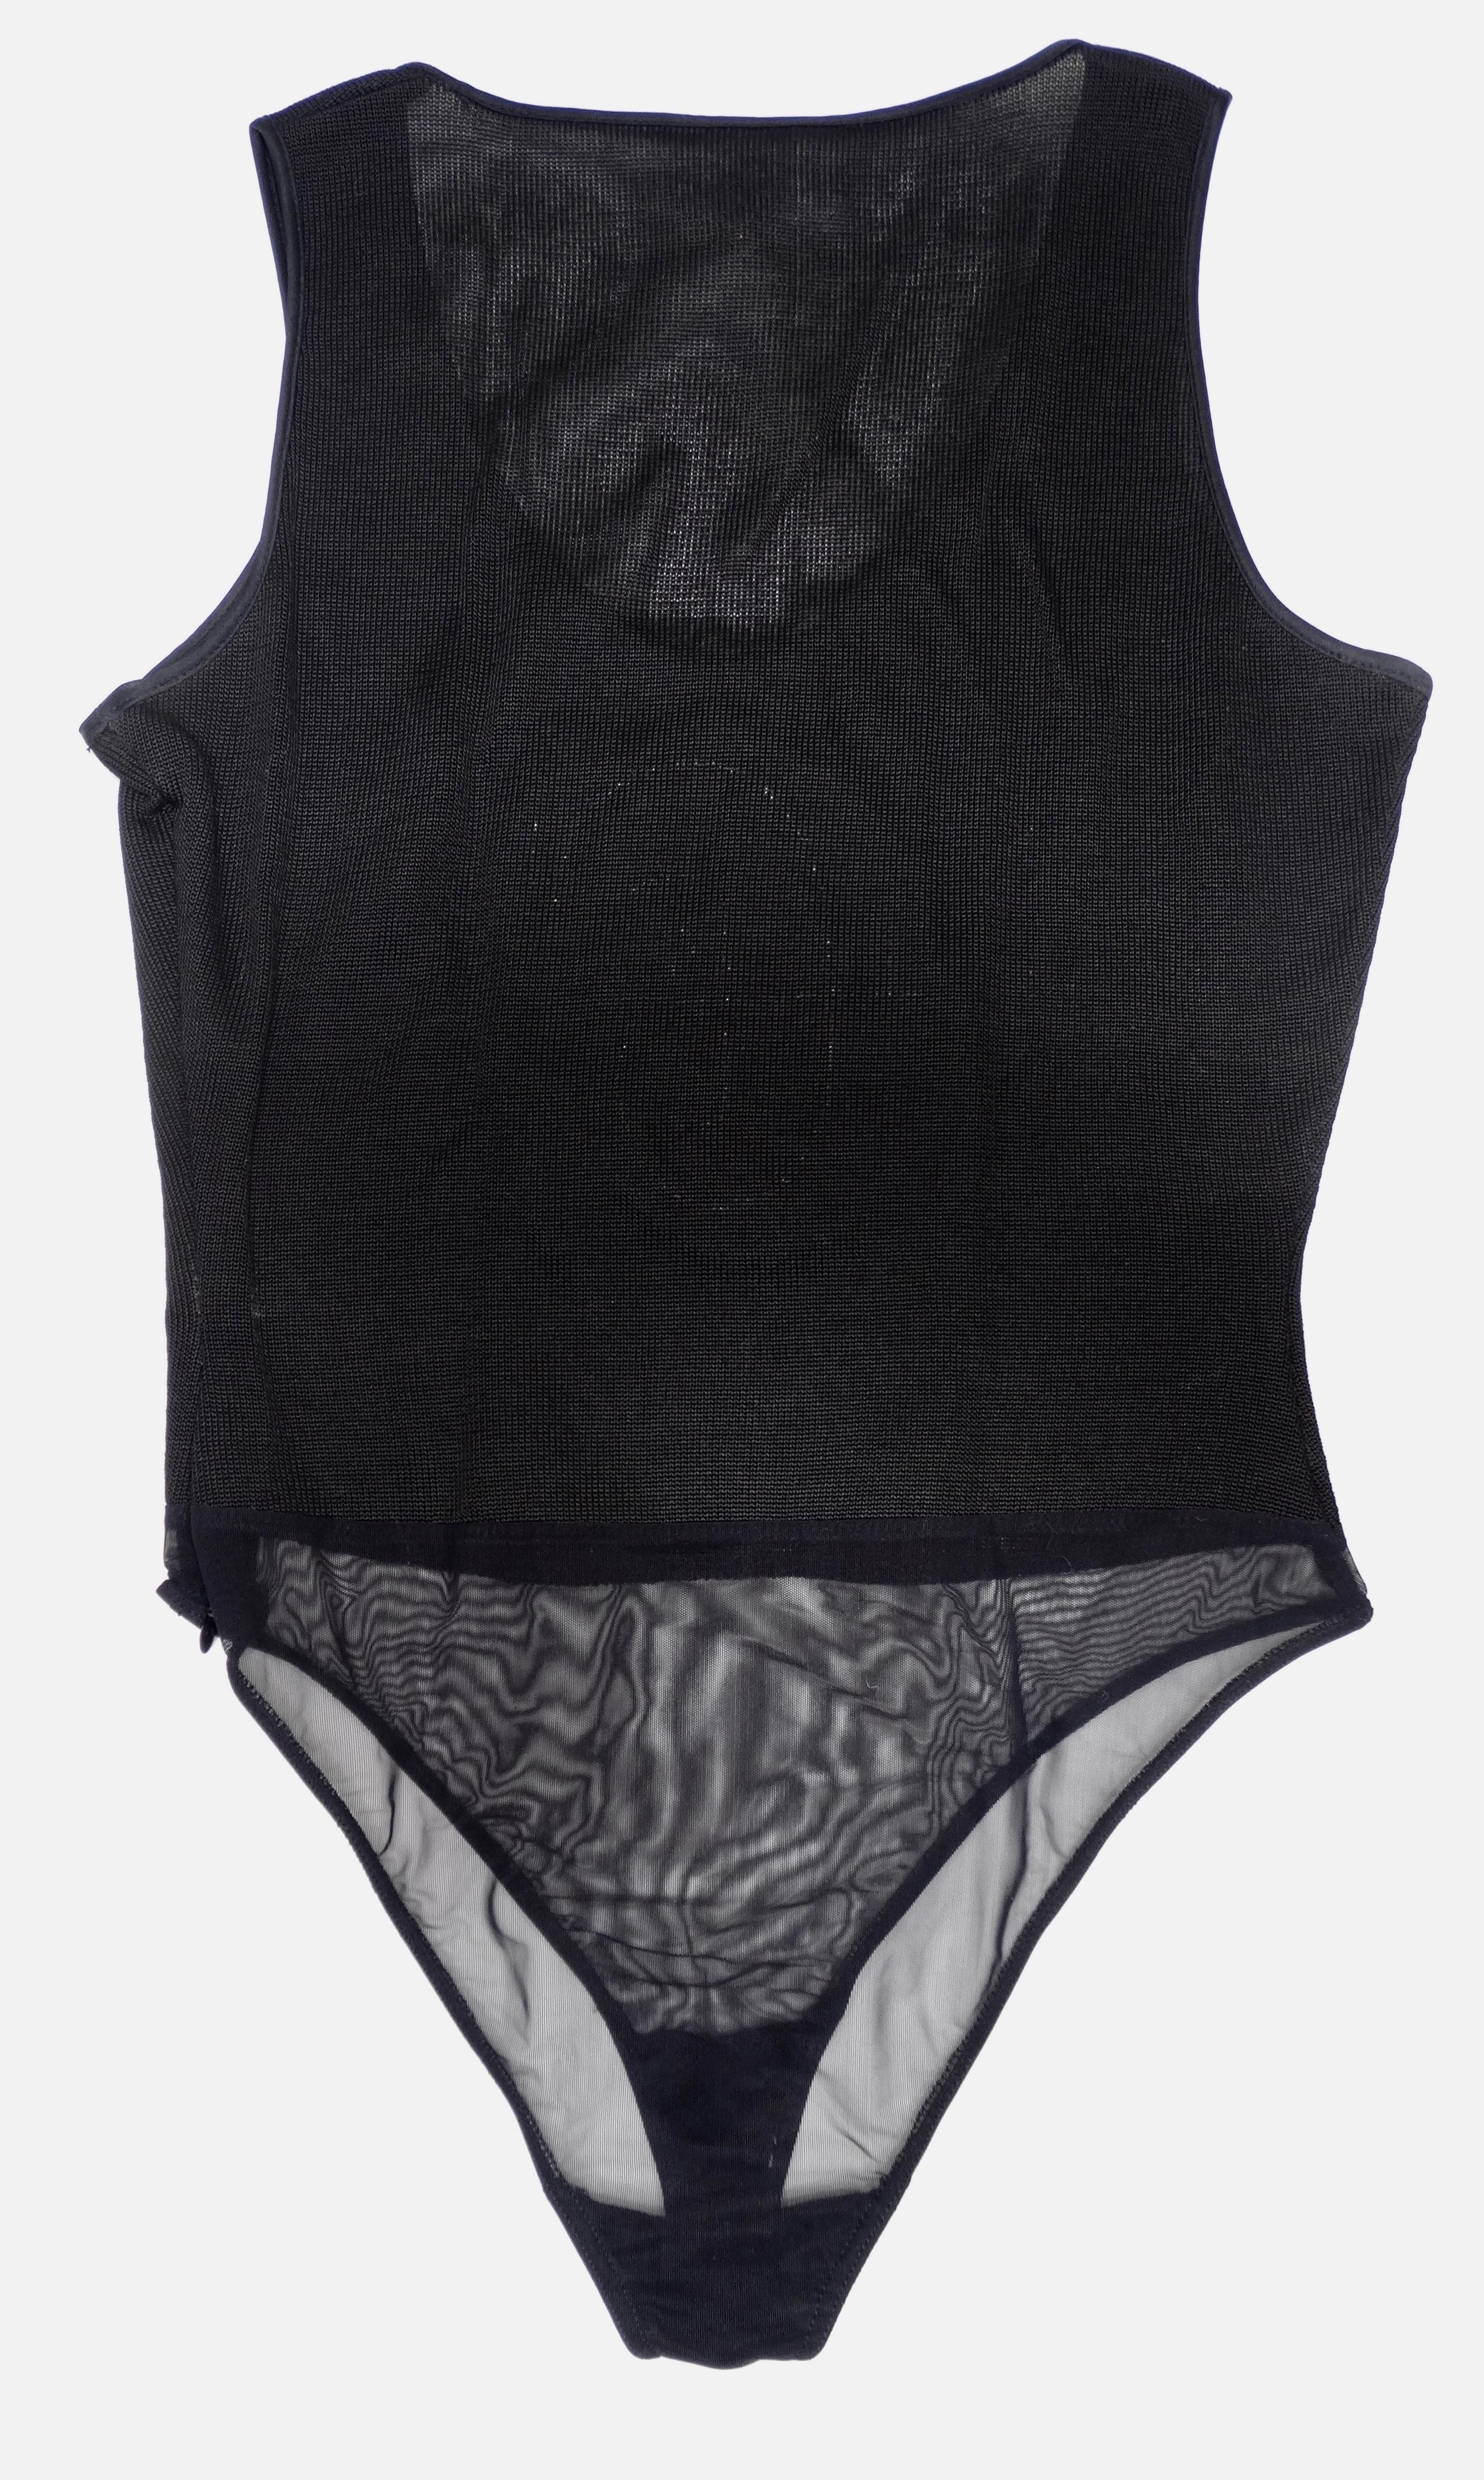 Gianfranco Ferre 1990s Embellished Bodysuit  In Good Condition For Sale In Scottsdale, AZ